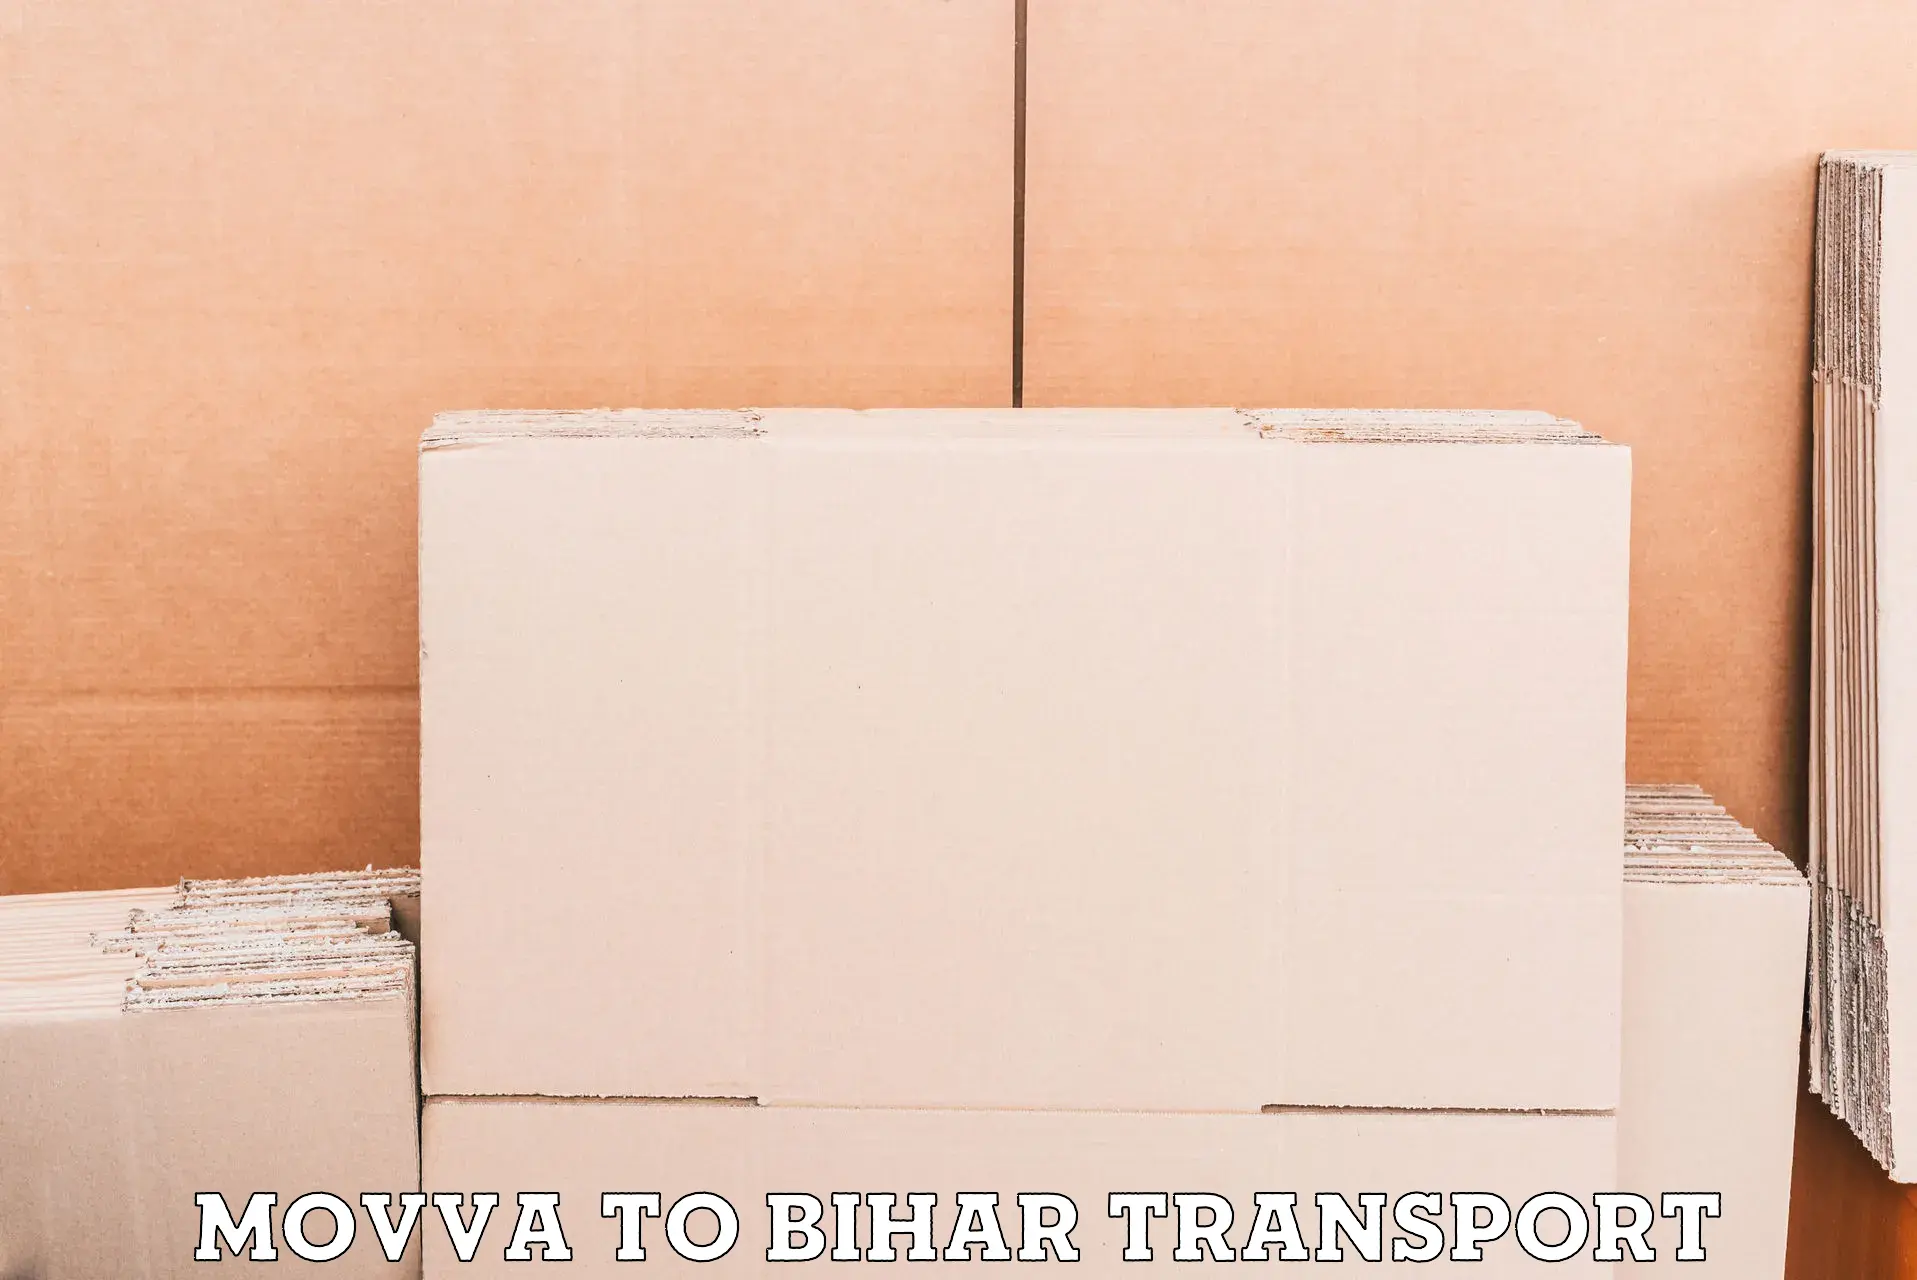 Furniture transport service Movva to Kamtaul